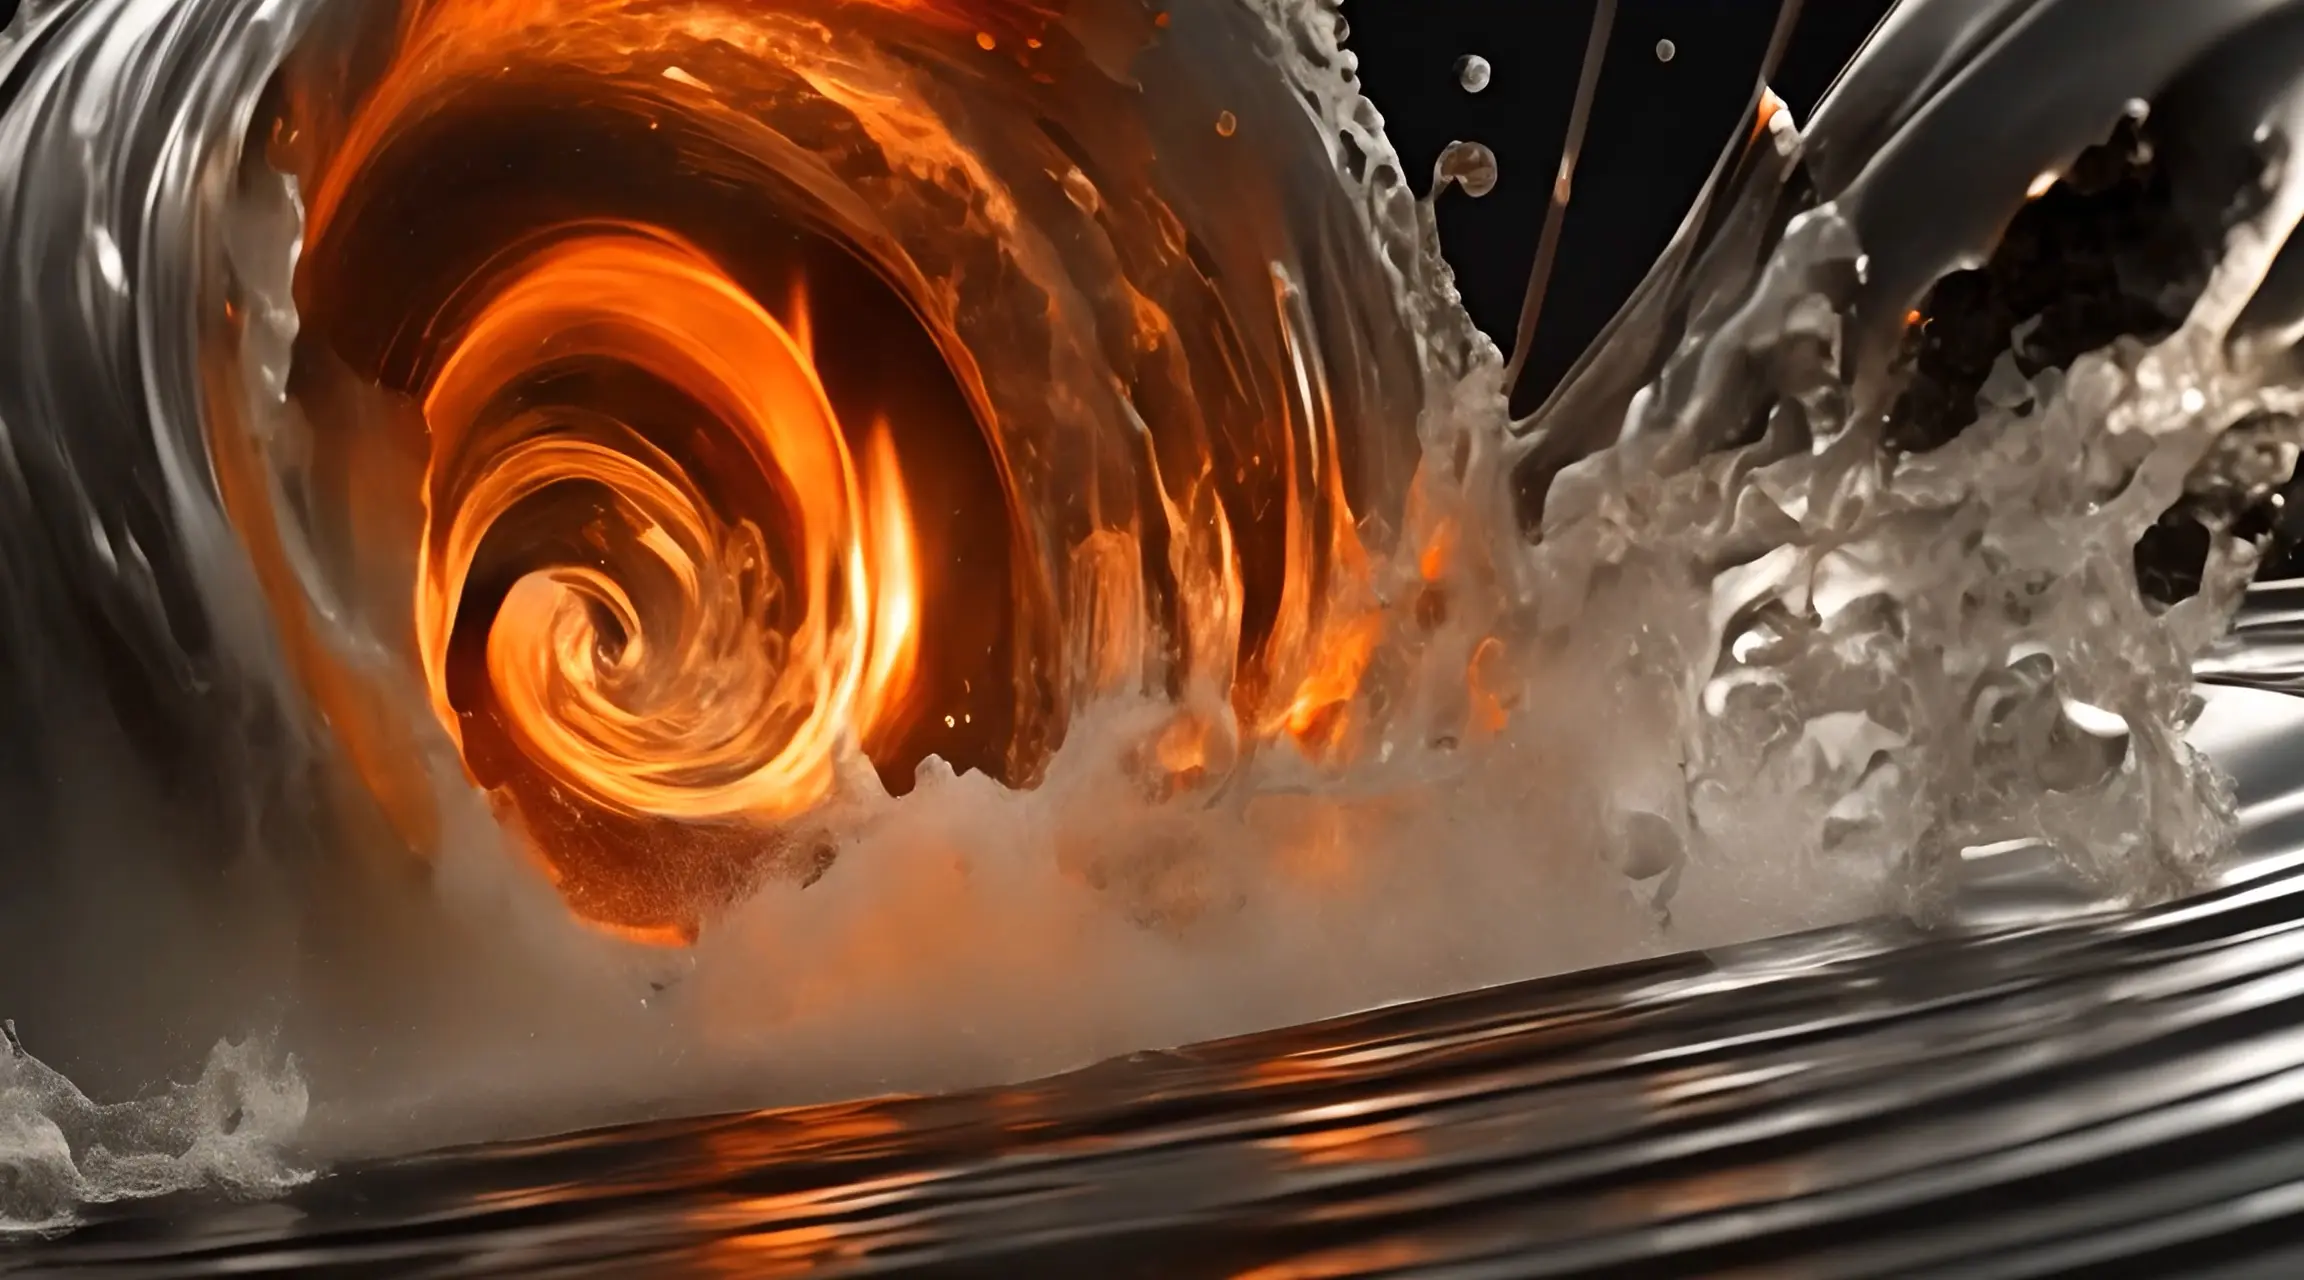 Blaze Current Flaming Water Spiral Video Loop